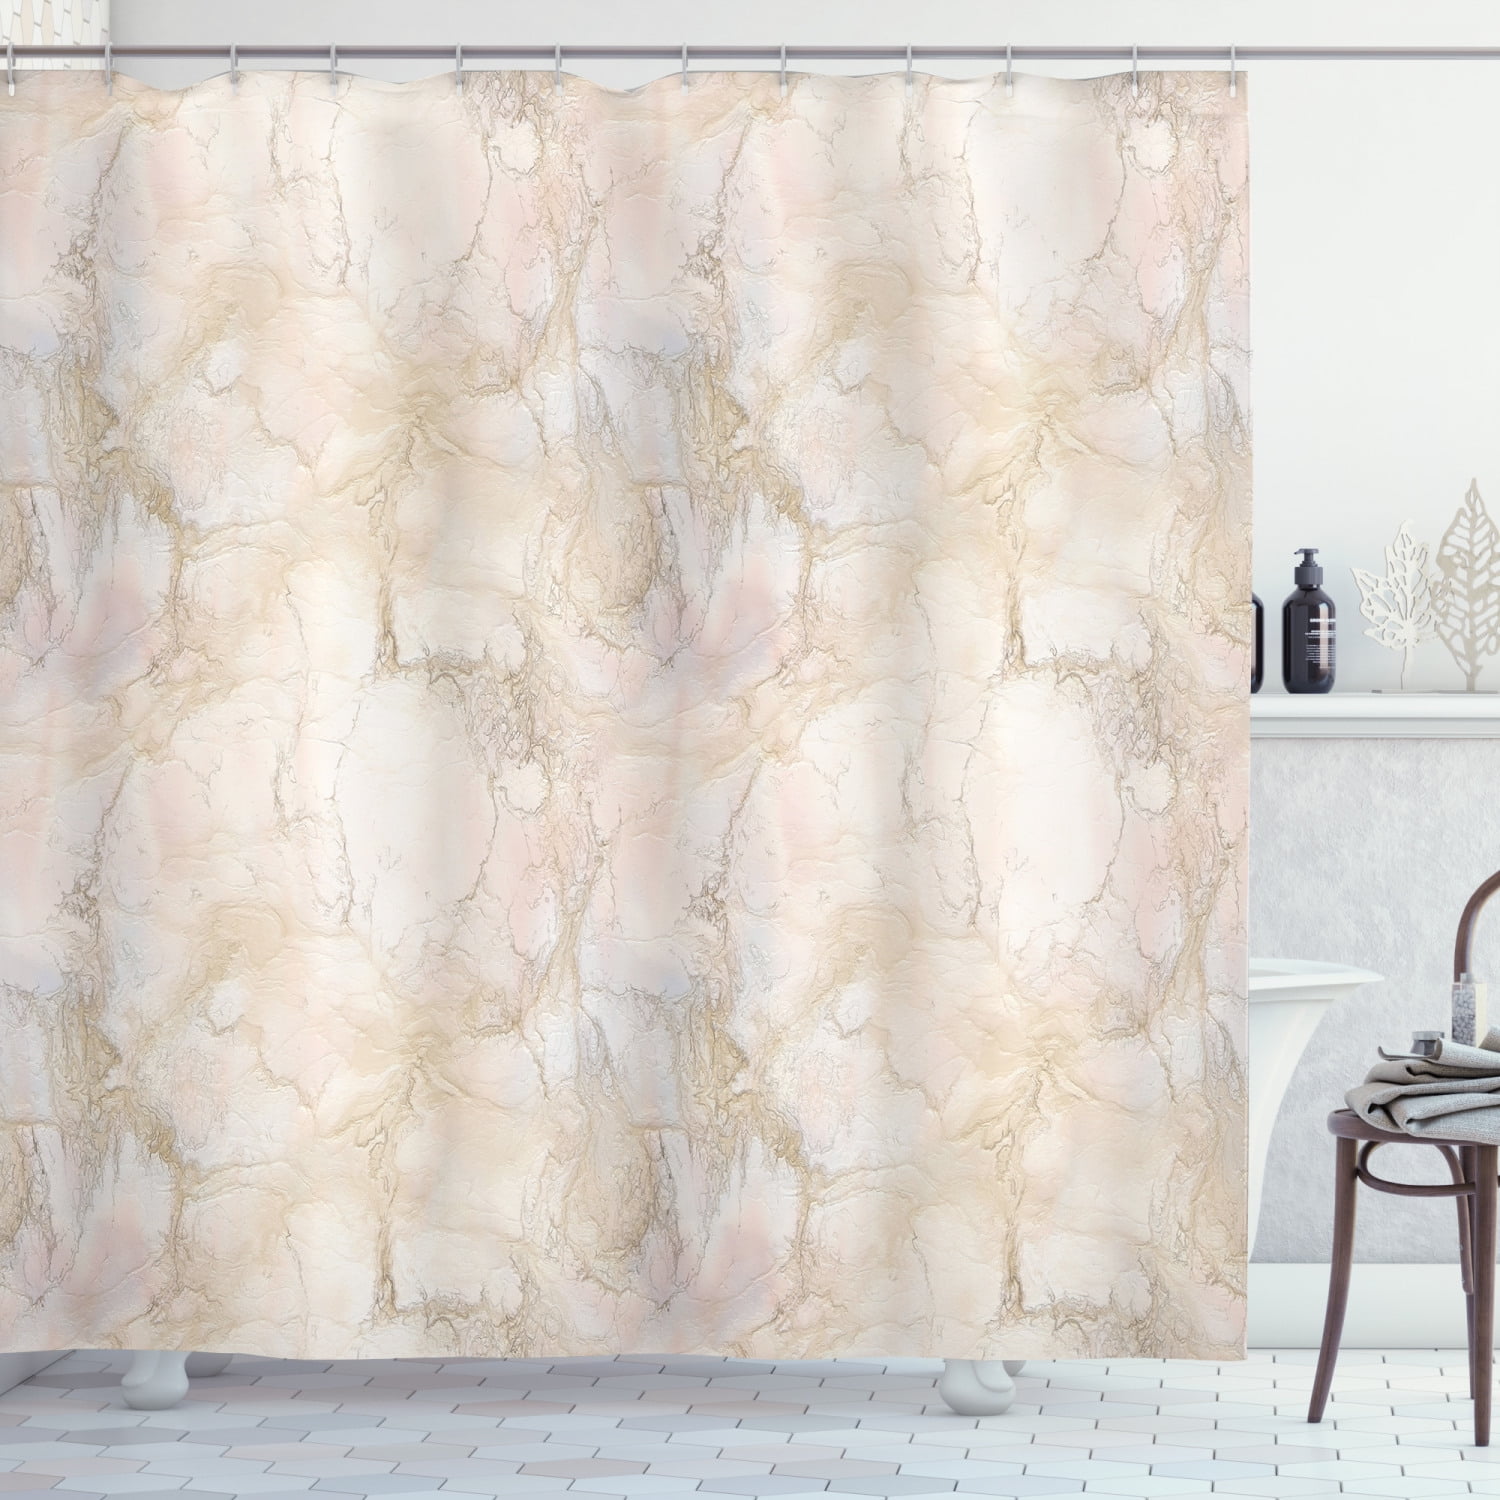 72x72'' Marble Stone Texture Bathroom Fabric Shower Curtain Waterproof 12 Hooks 